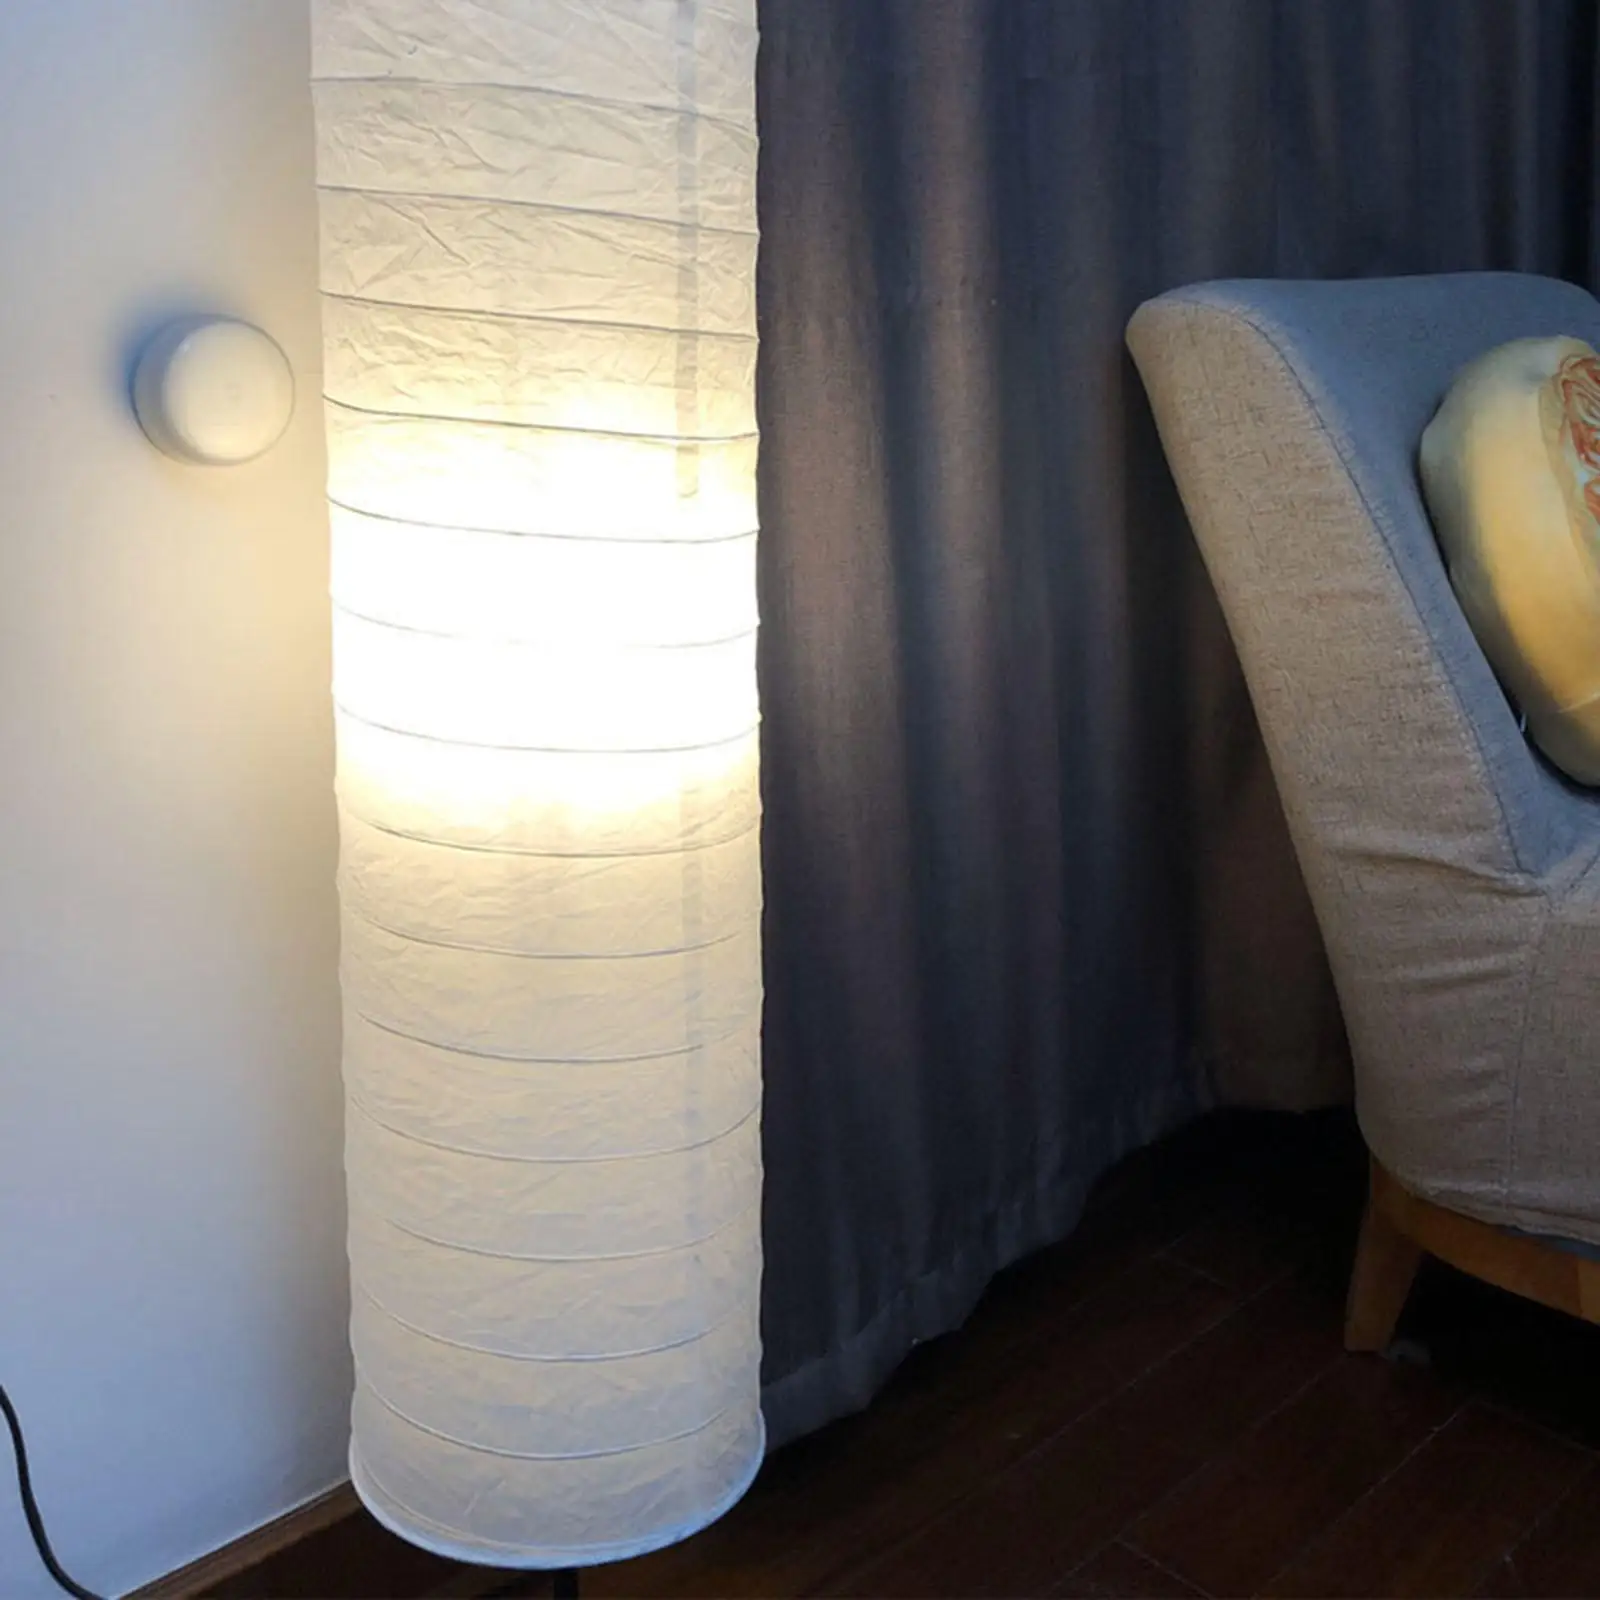 White Paper Design Floor Lamp Shade for Living Room Contemporary Floor Lamp